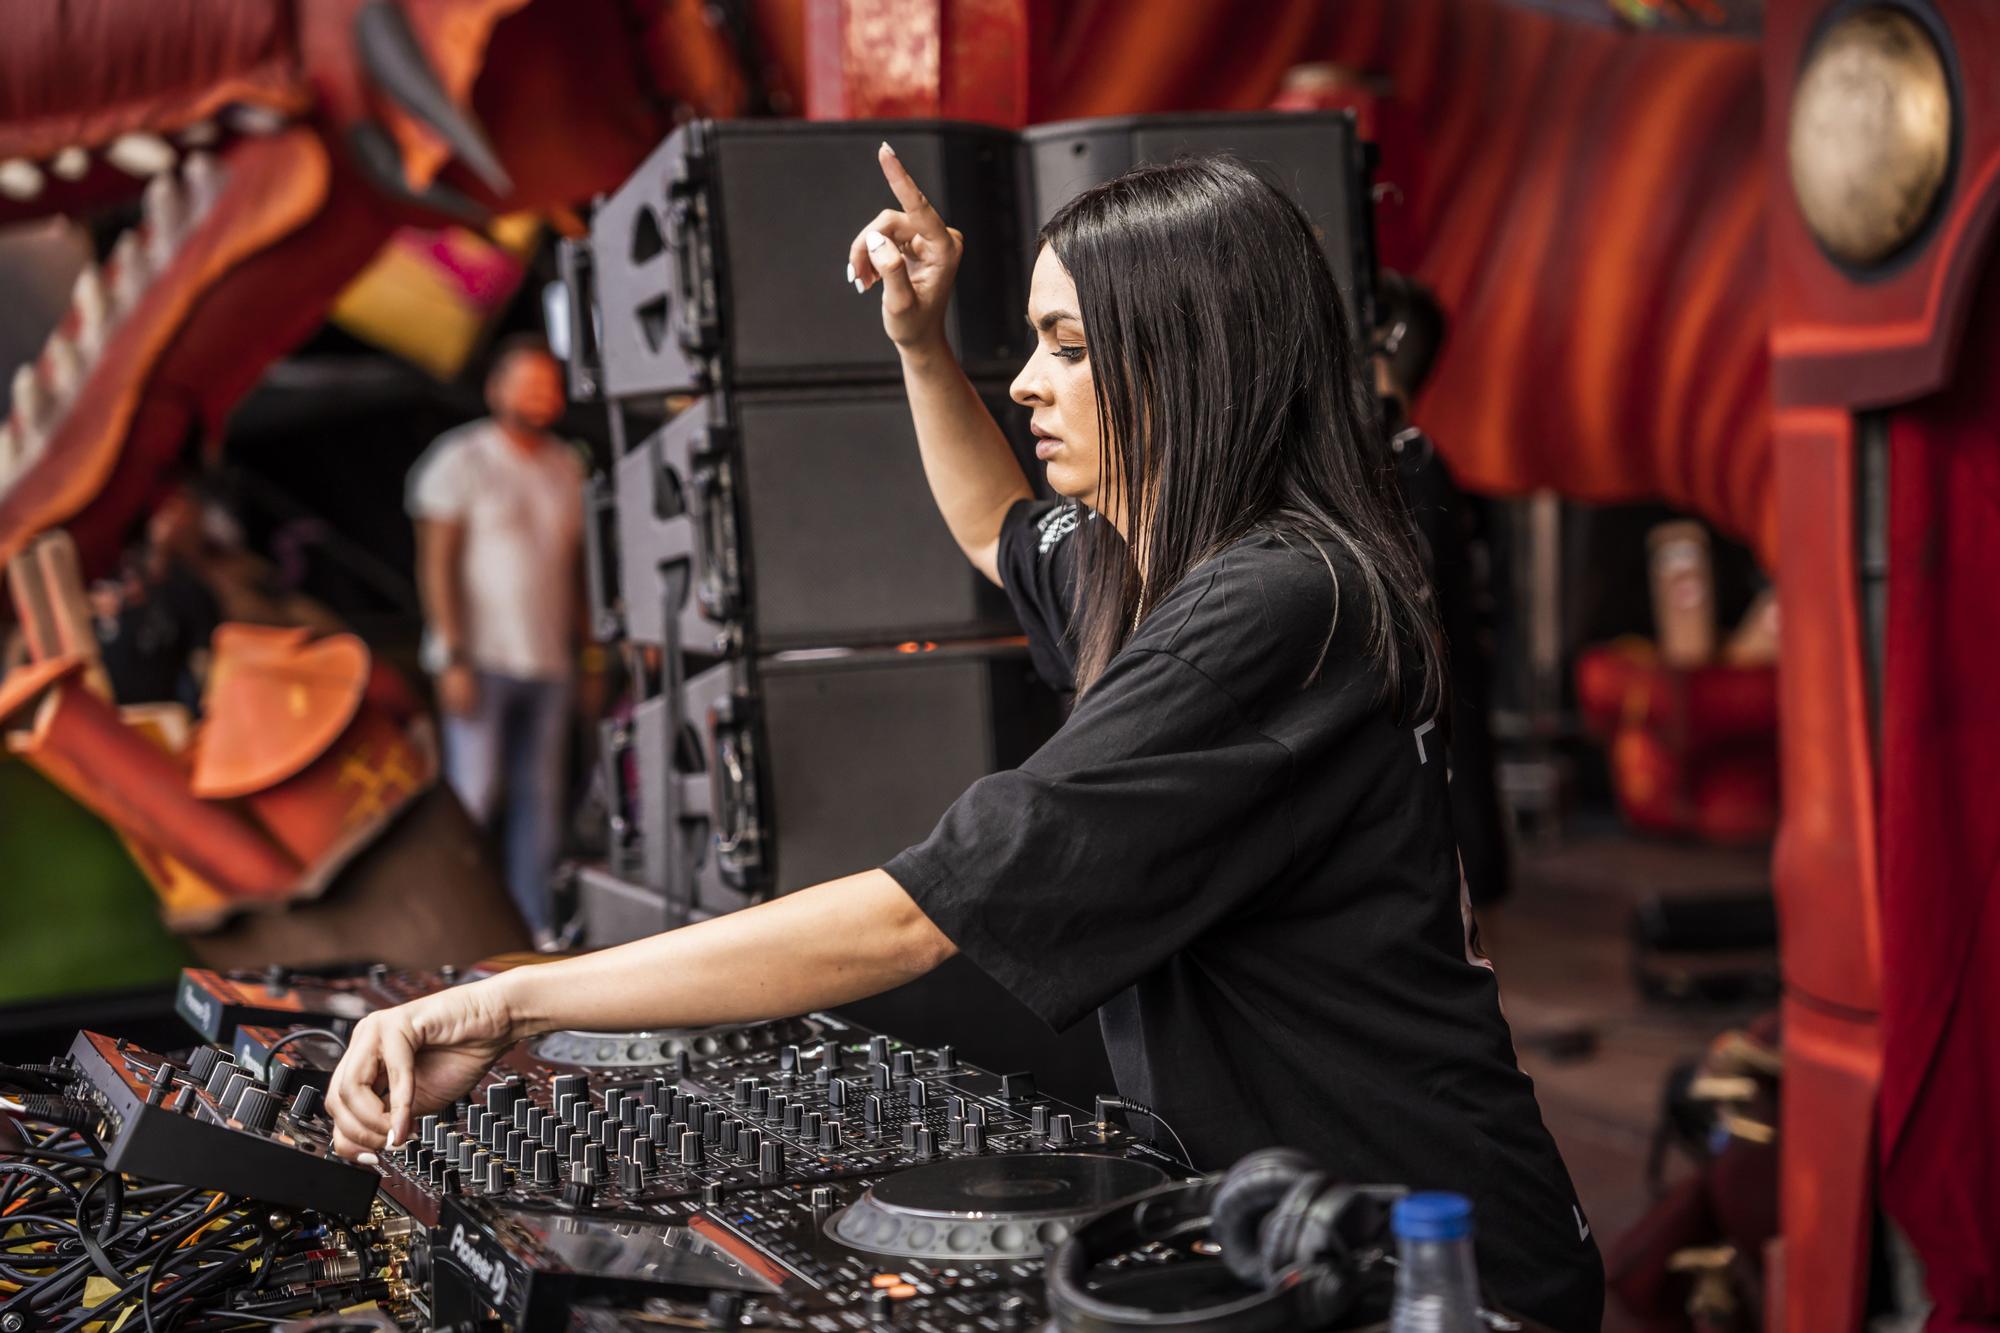 FOTOS | Fin de fiesta Origen Fest 2023 en Son Fusteret, Palma: música electrónica en el Chinese Row Year